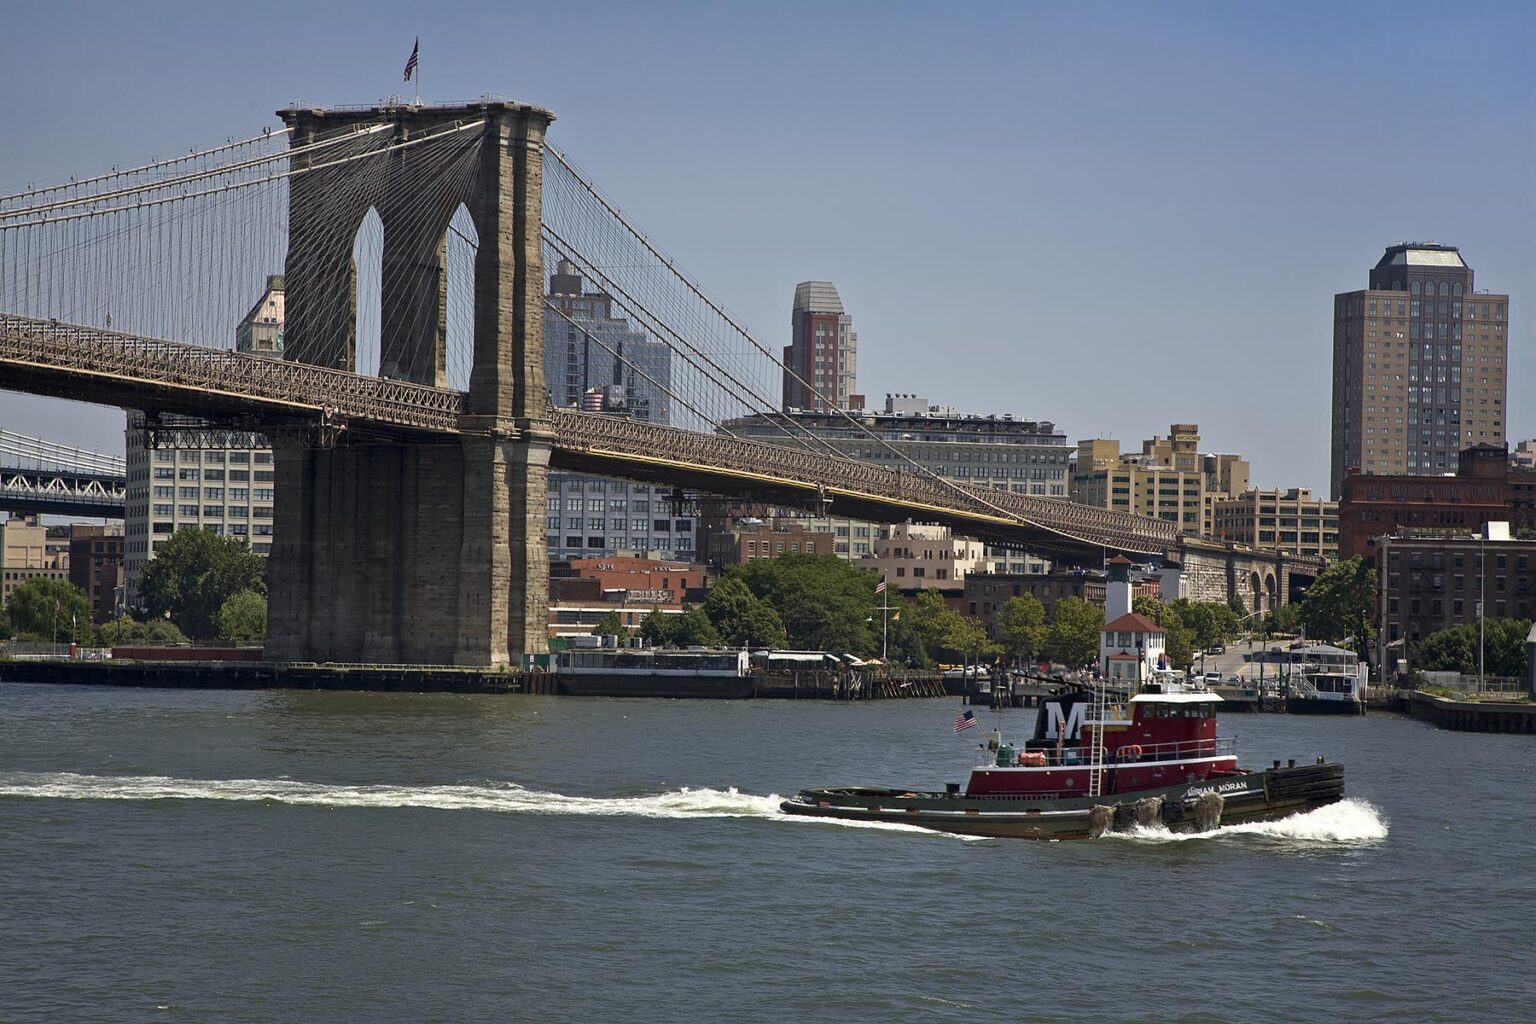 TUGBOAT and eastern tower of the BROOKLYN BRIDGE - NEW YORK CITY